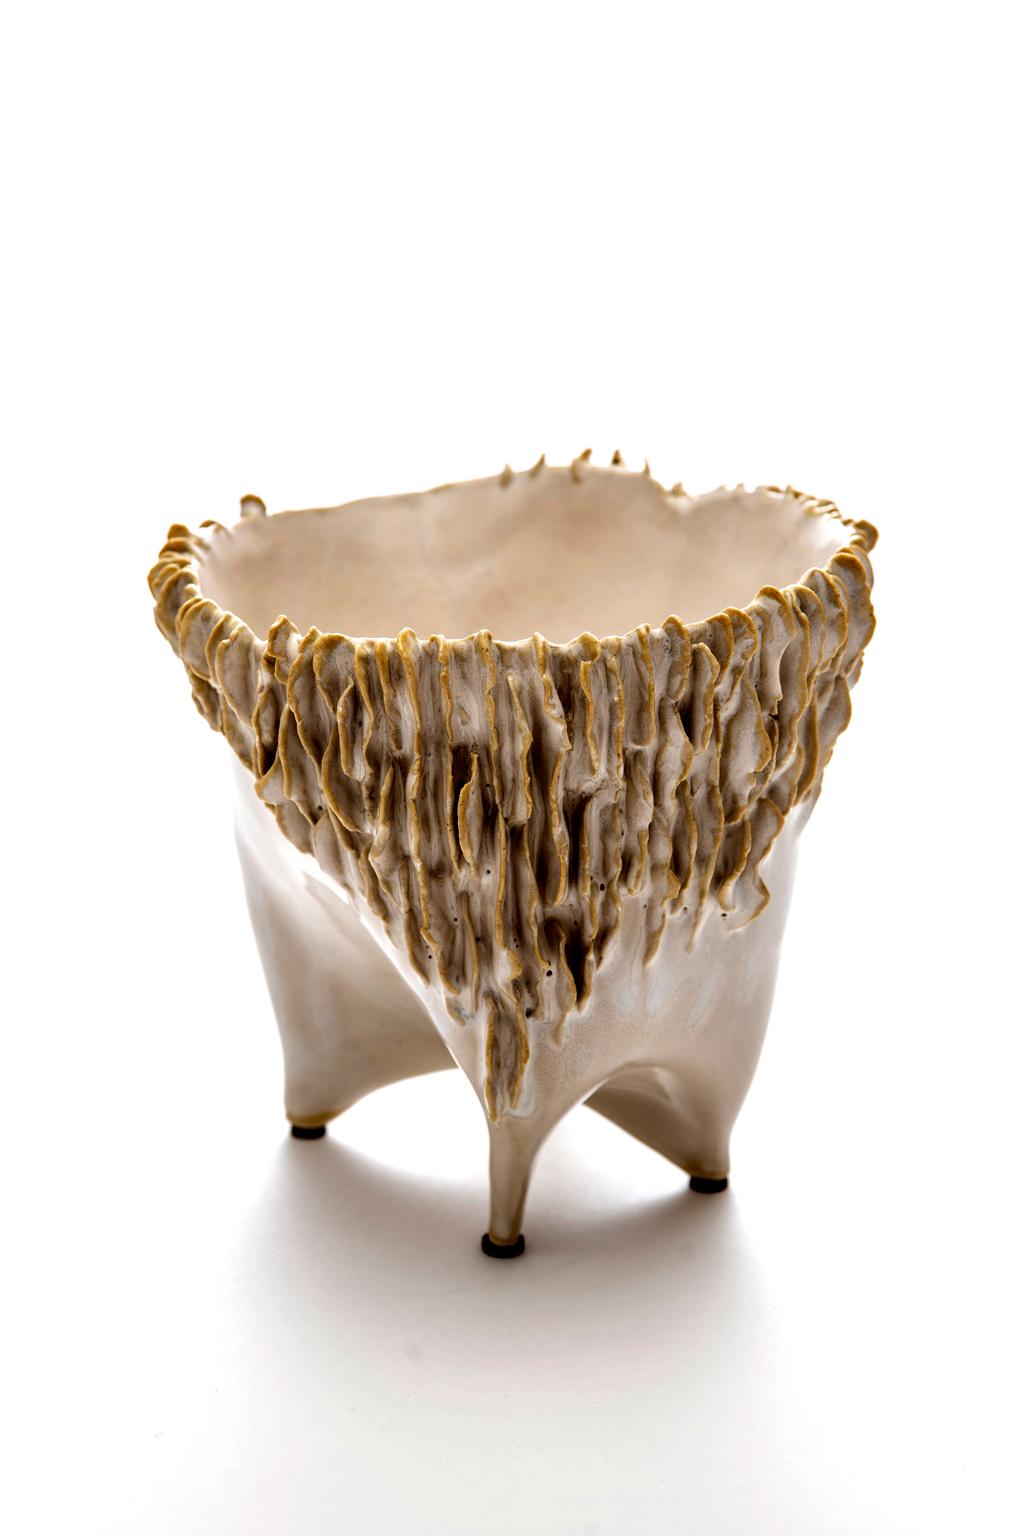 Glazed Ceramic vessel by contemporary ceramic artist Trish DeMasi.